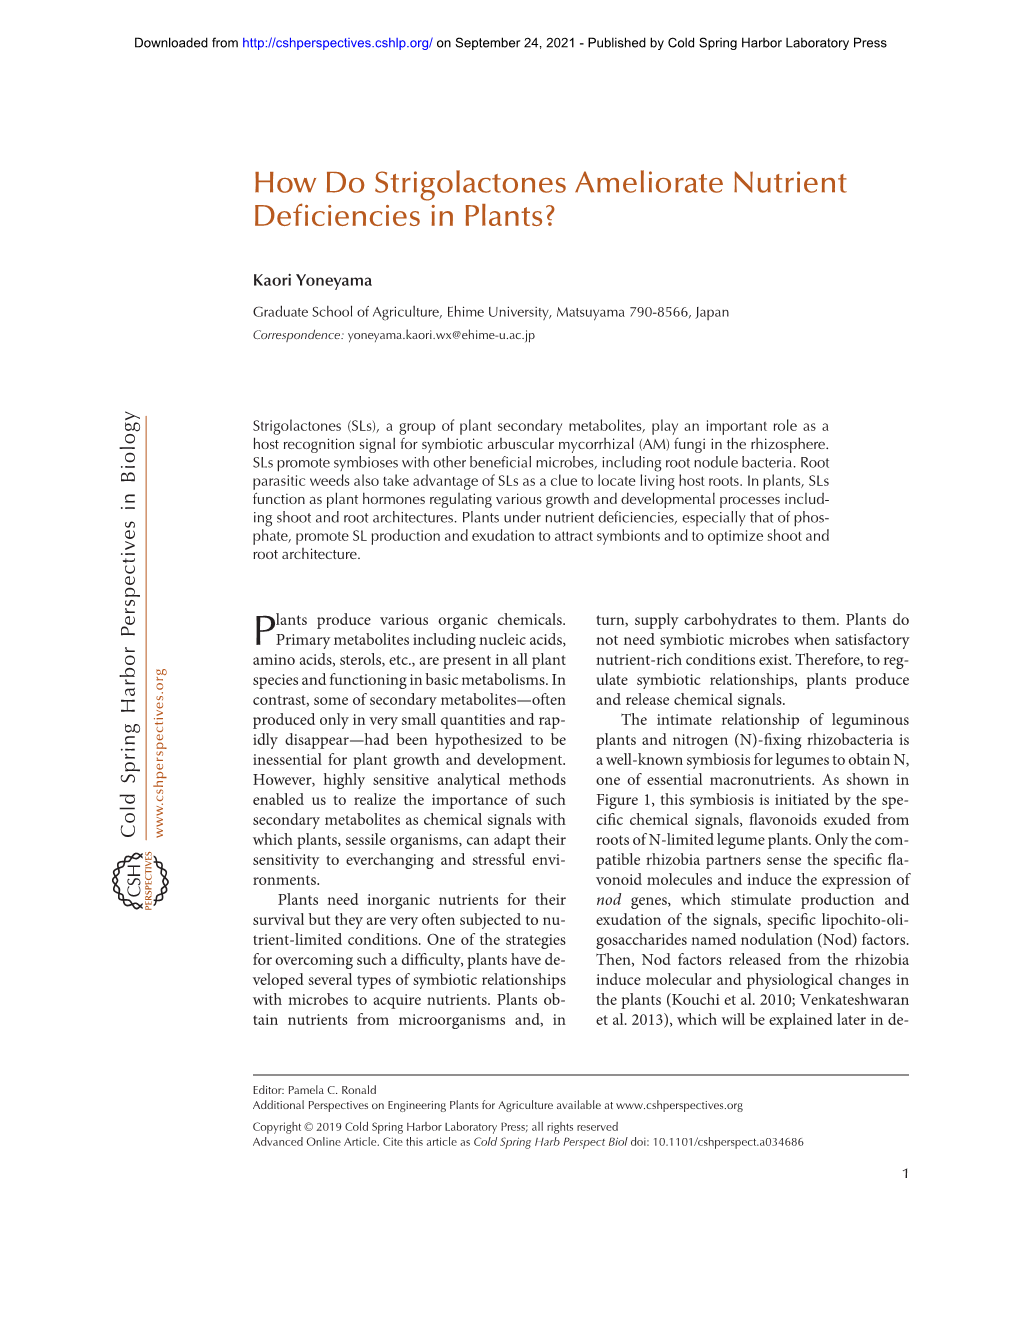 How Do Strigolactones Ameliorate Nutrient Deficiencies in Plants?